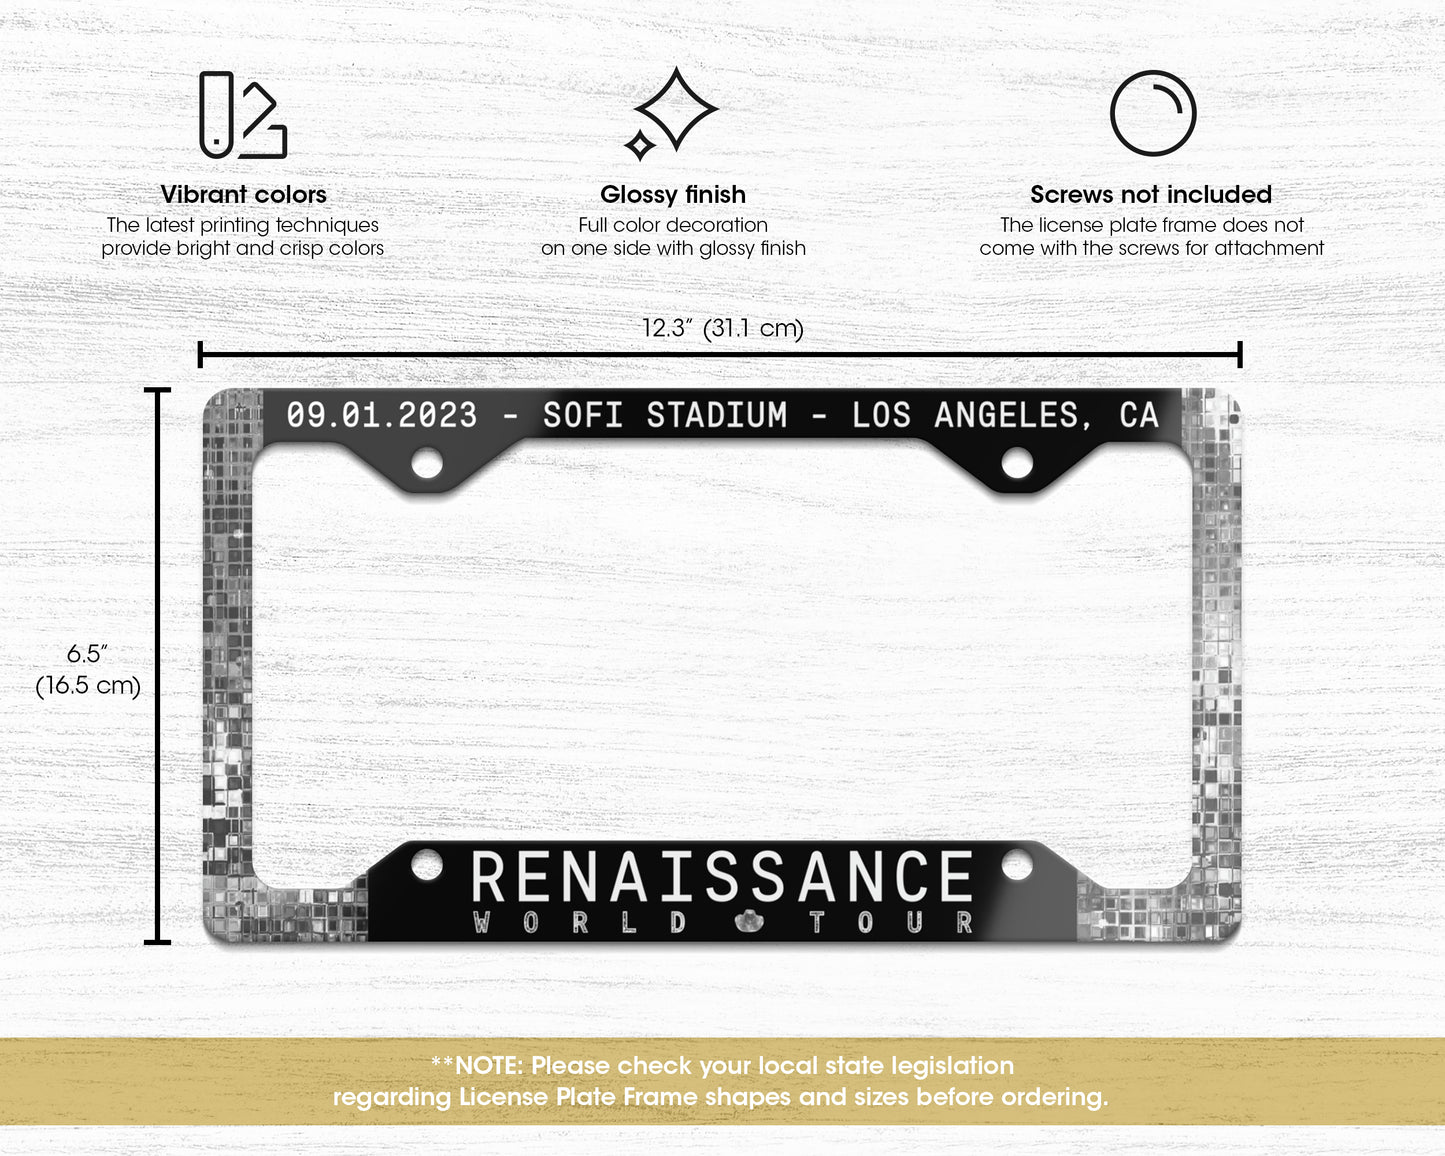 Renaissance World Tour license plate frame